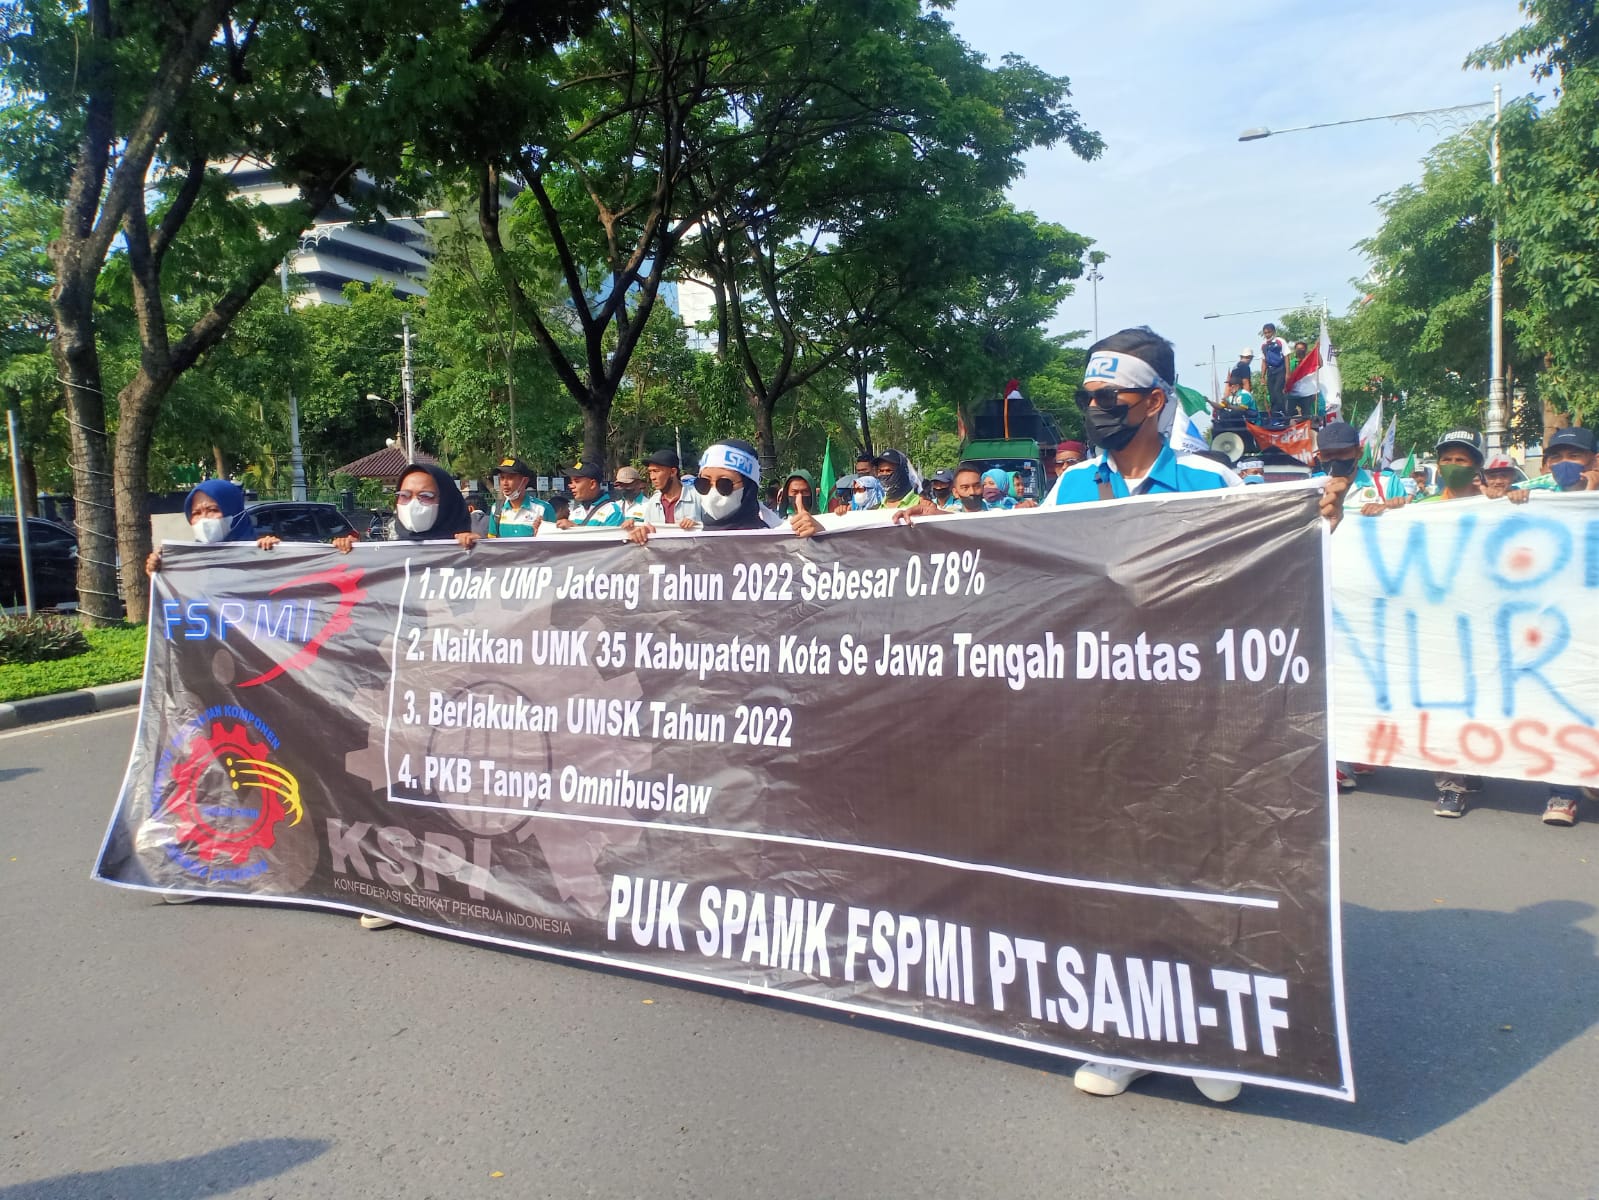 Demo KSPI Jawa Tengah, mereka mengancam untuk melakukan mogok kerja jika tuntutannya tidak terpenuhi,Rezanda Akbar D/Lingkar.co